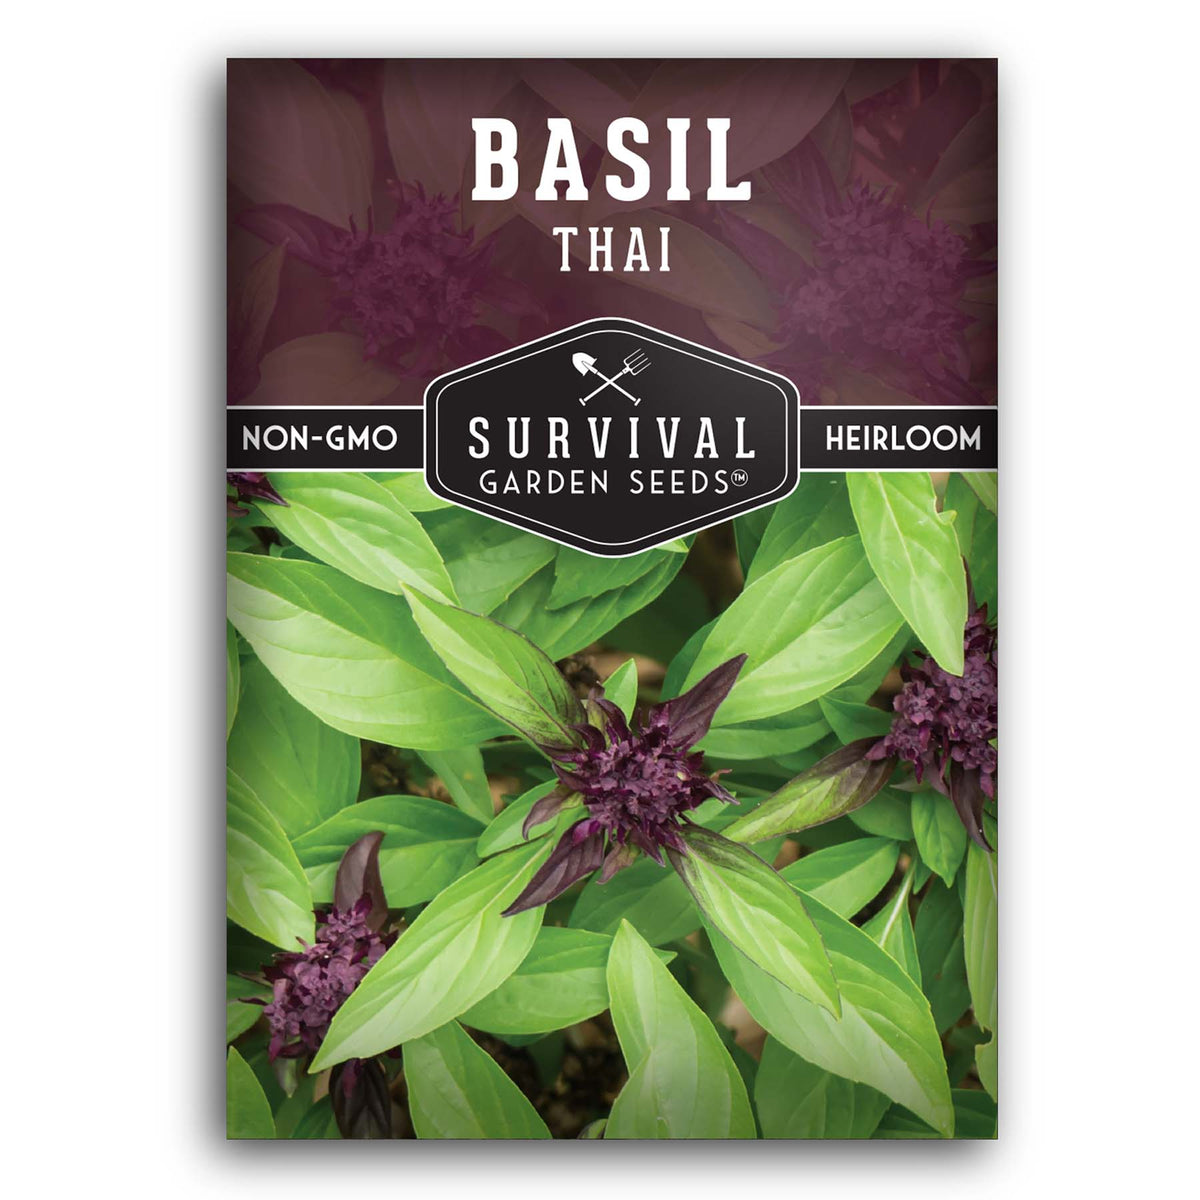 Thai Basil seeds for planting